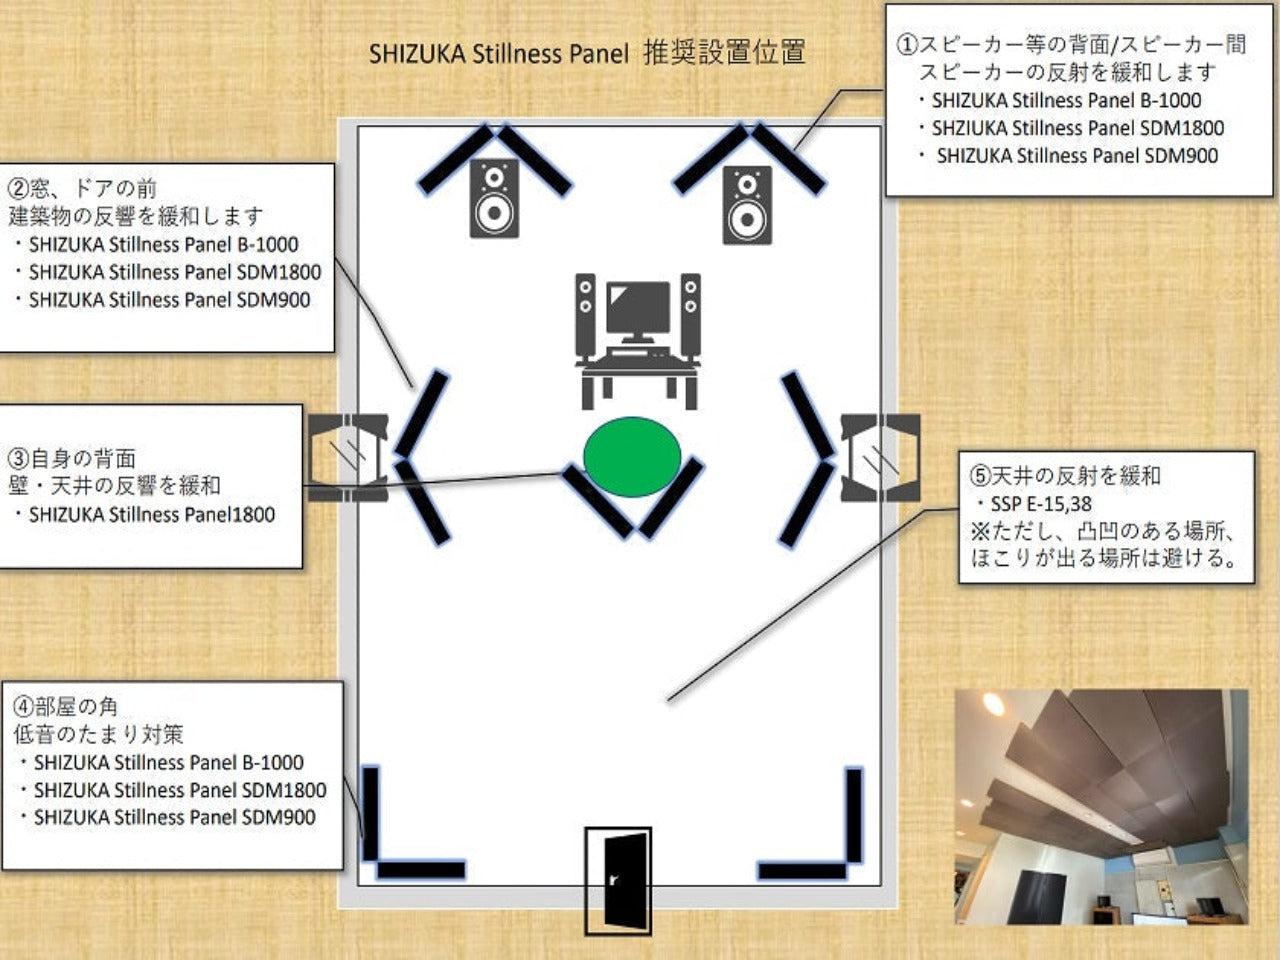 SHIZUKA Stillness Panel SDM - サイレント・プロバイダー